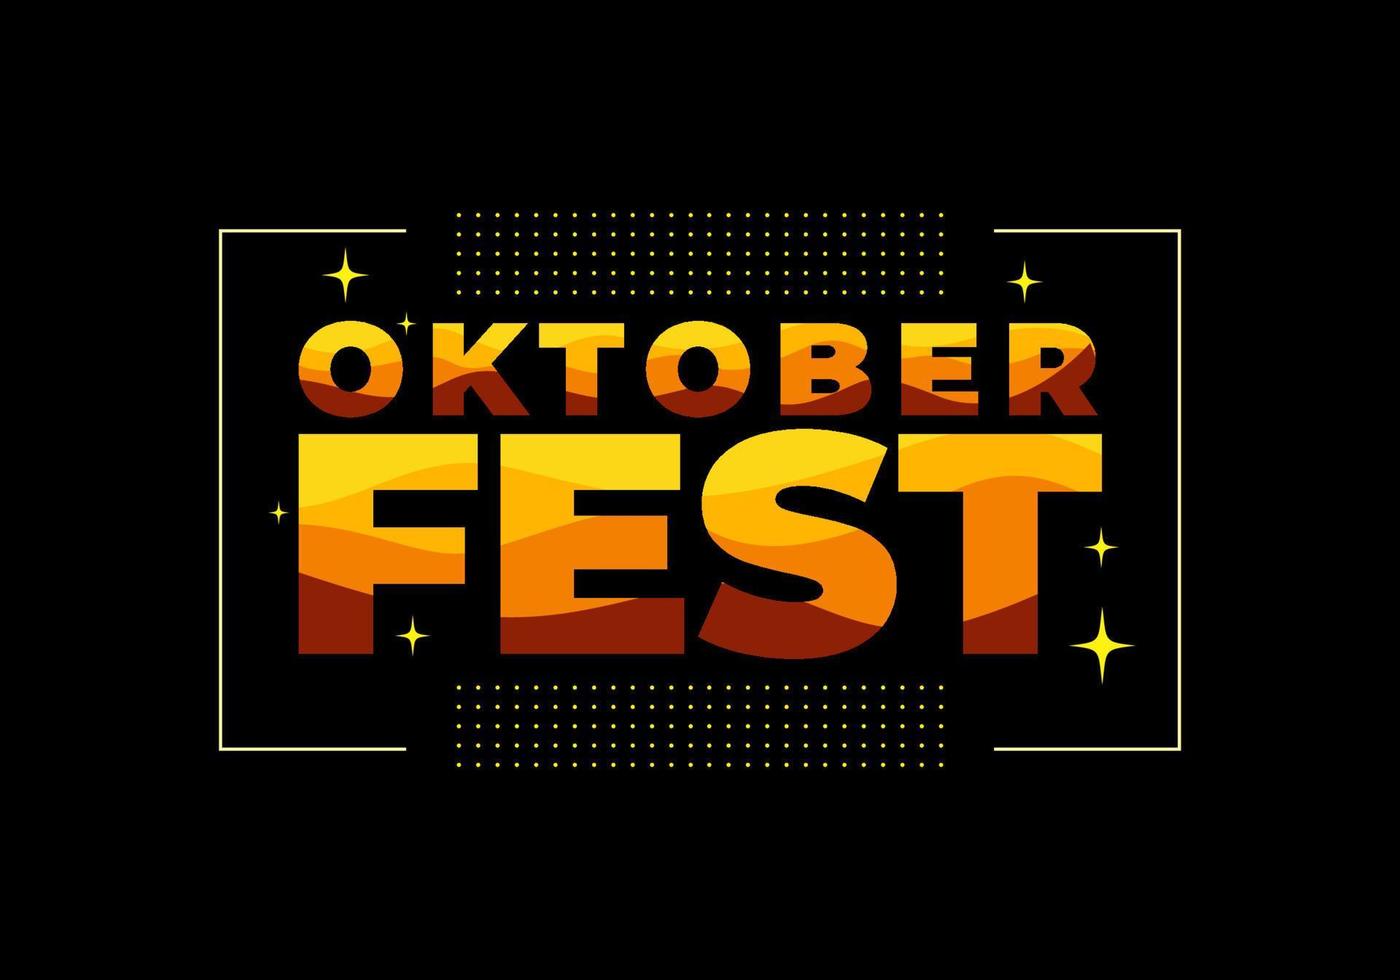 Oktoberfest-Texteffekt für Social-Media-Banner vektor